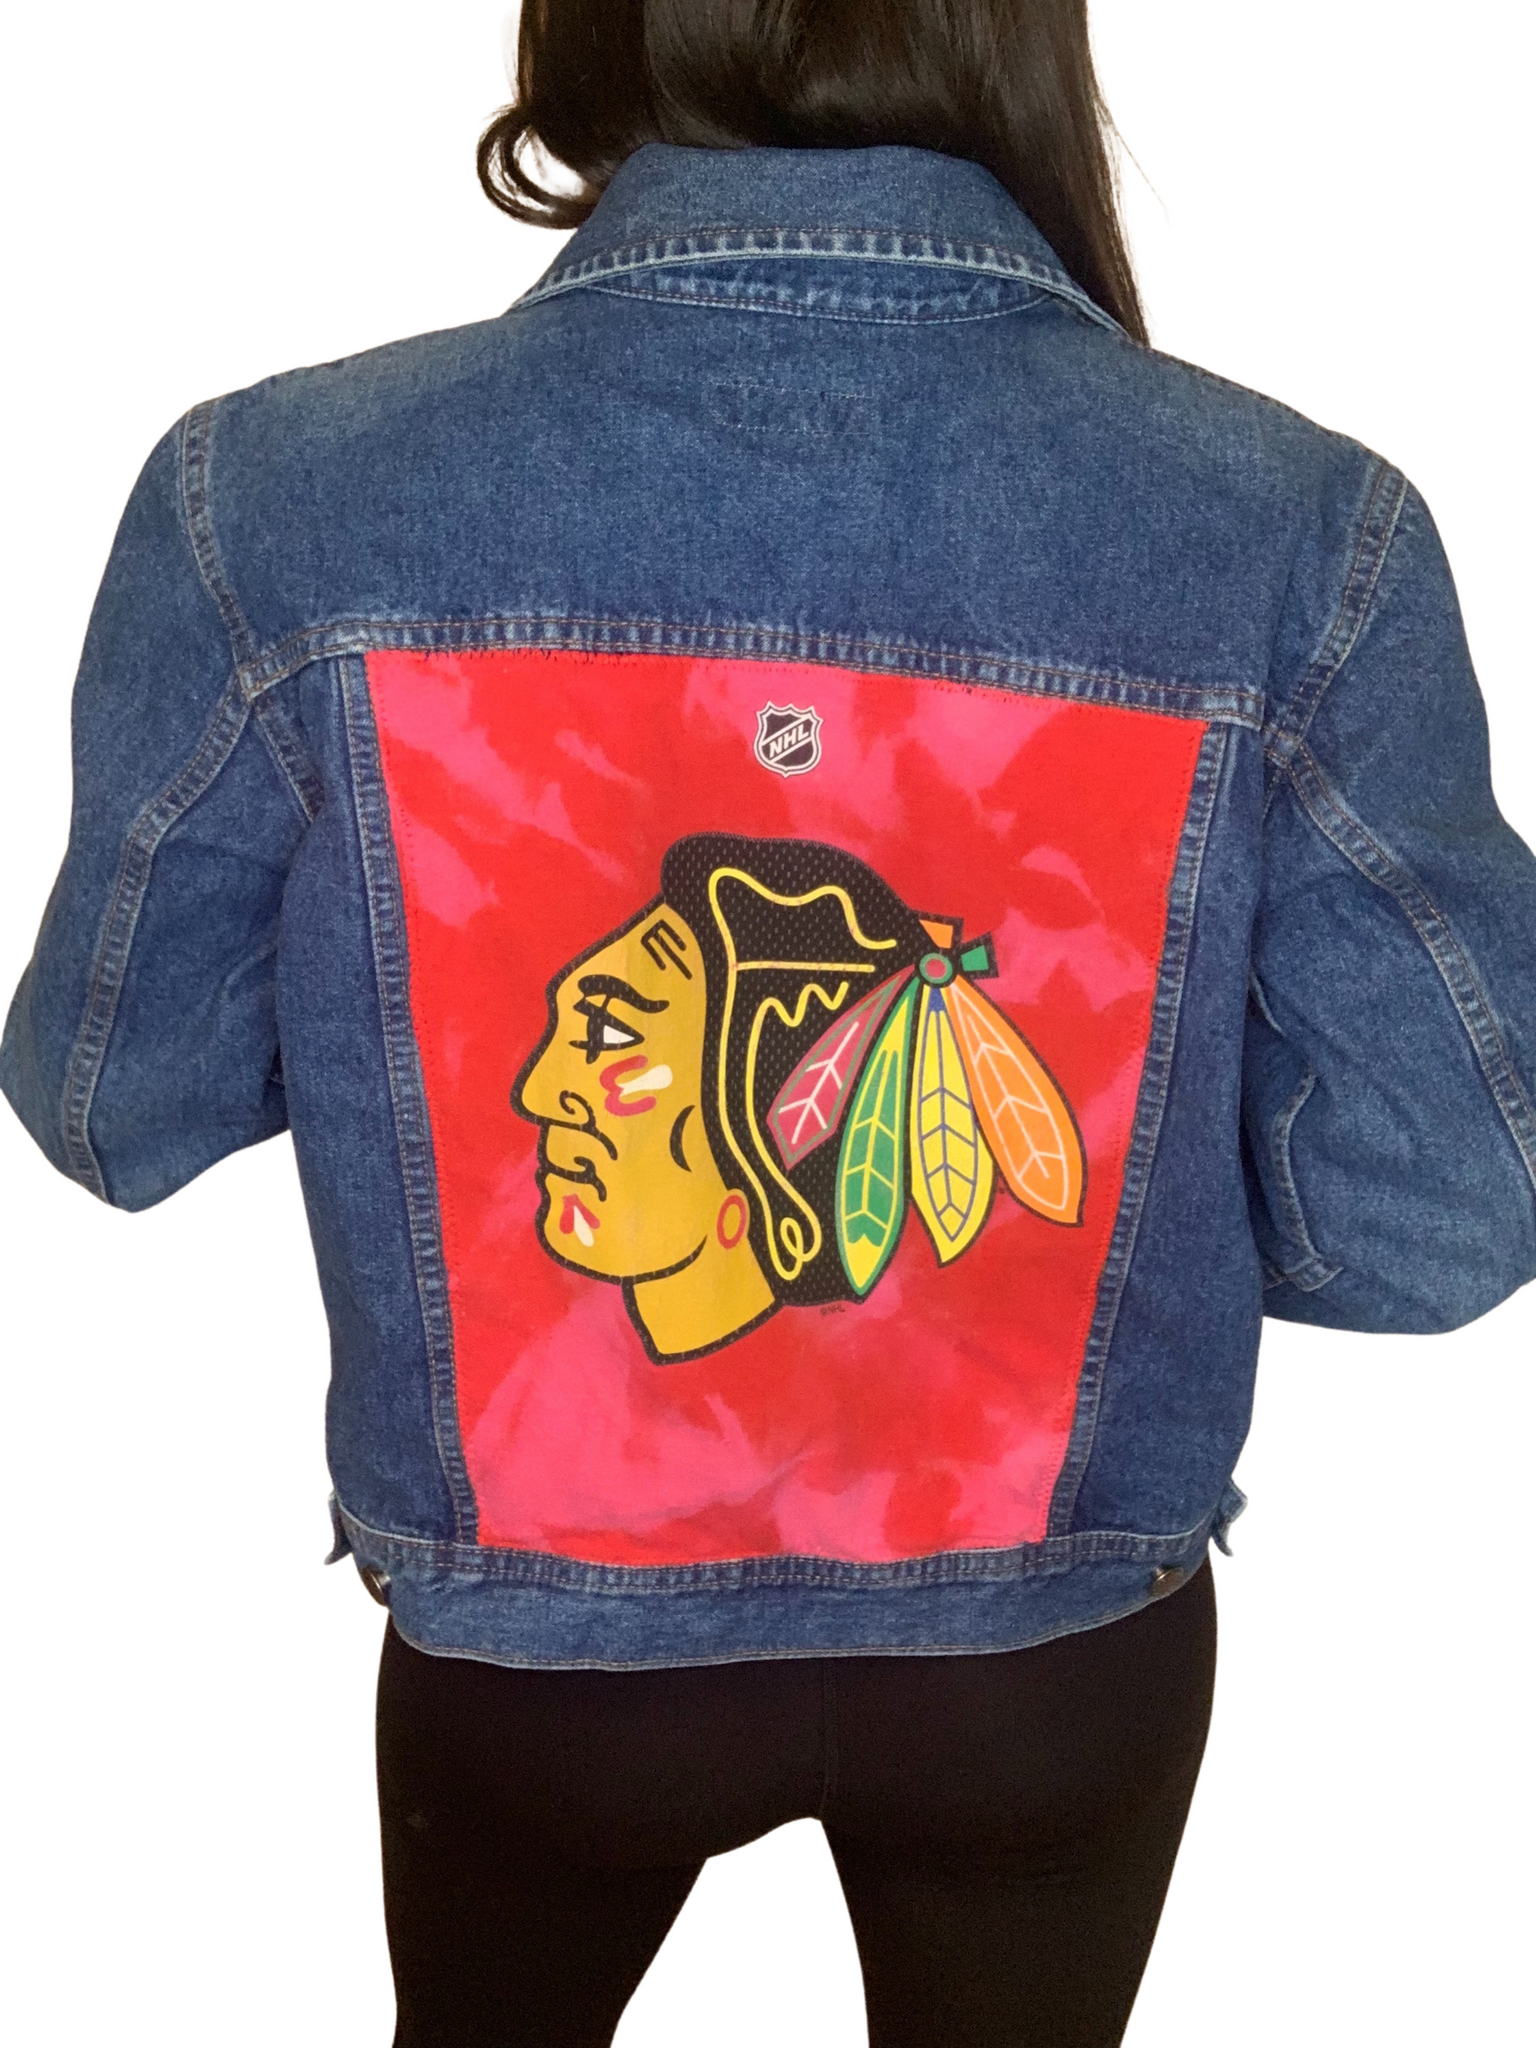 NBA chicago Bulls jeans jacket Woman Size L